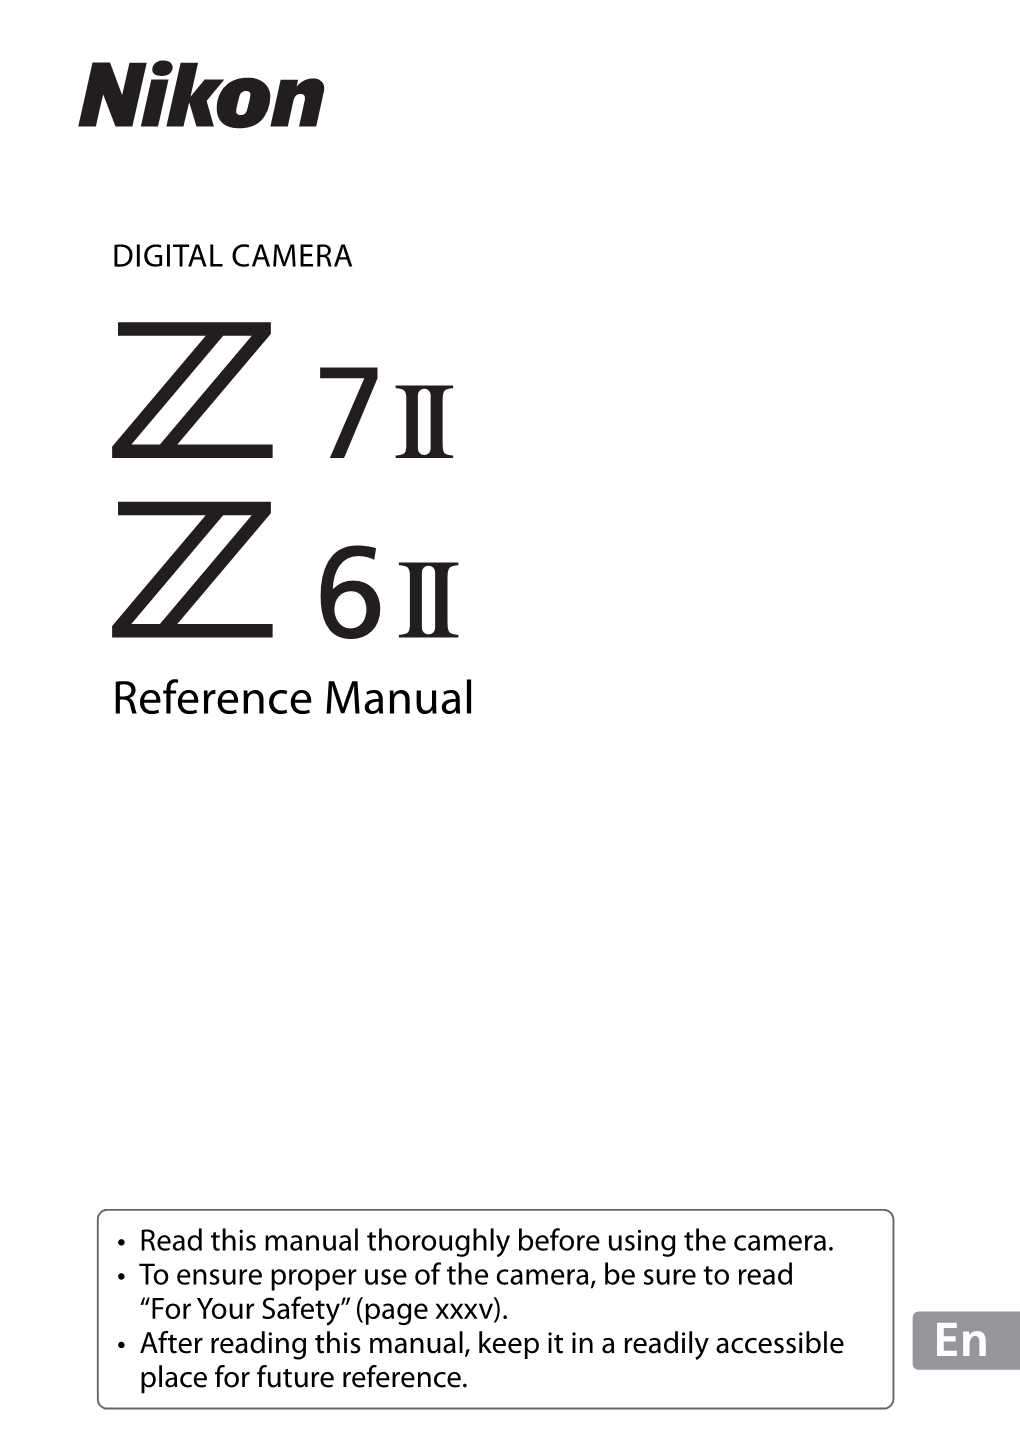 Reference Manual En